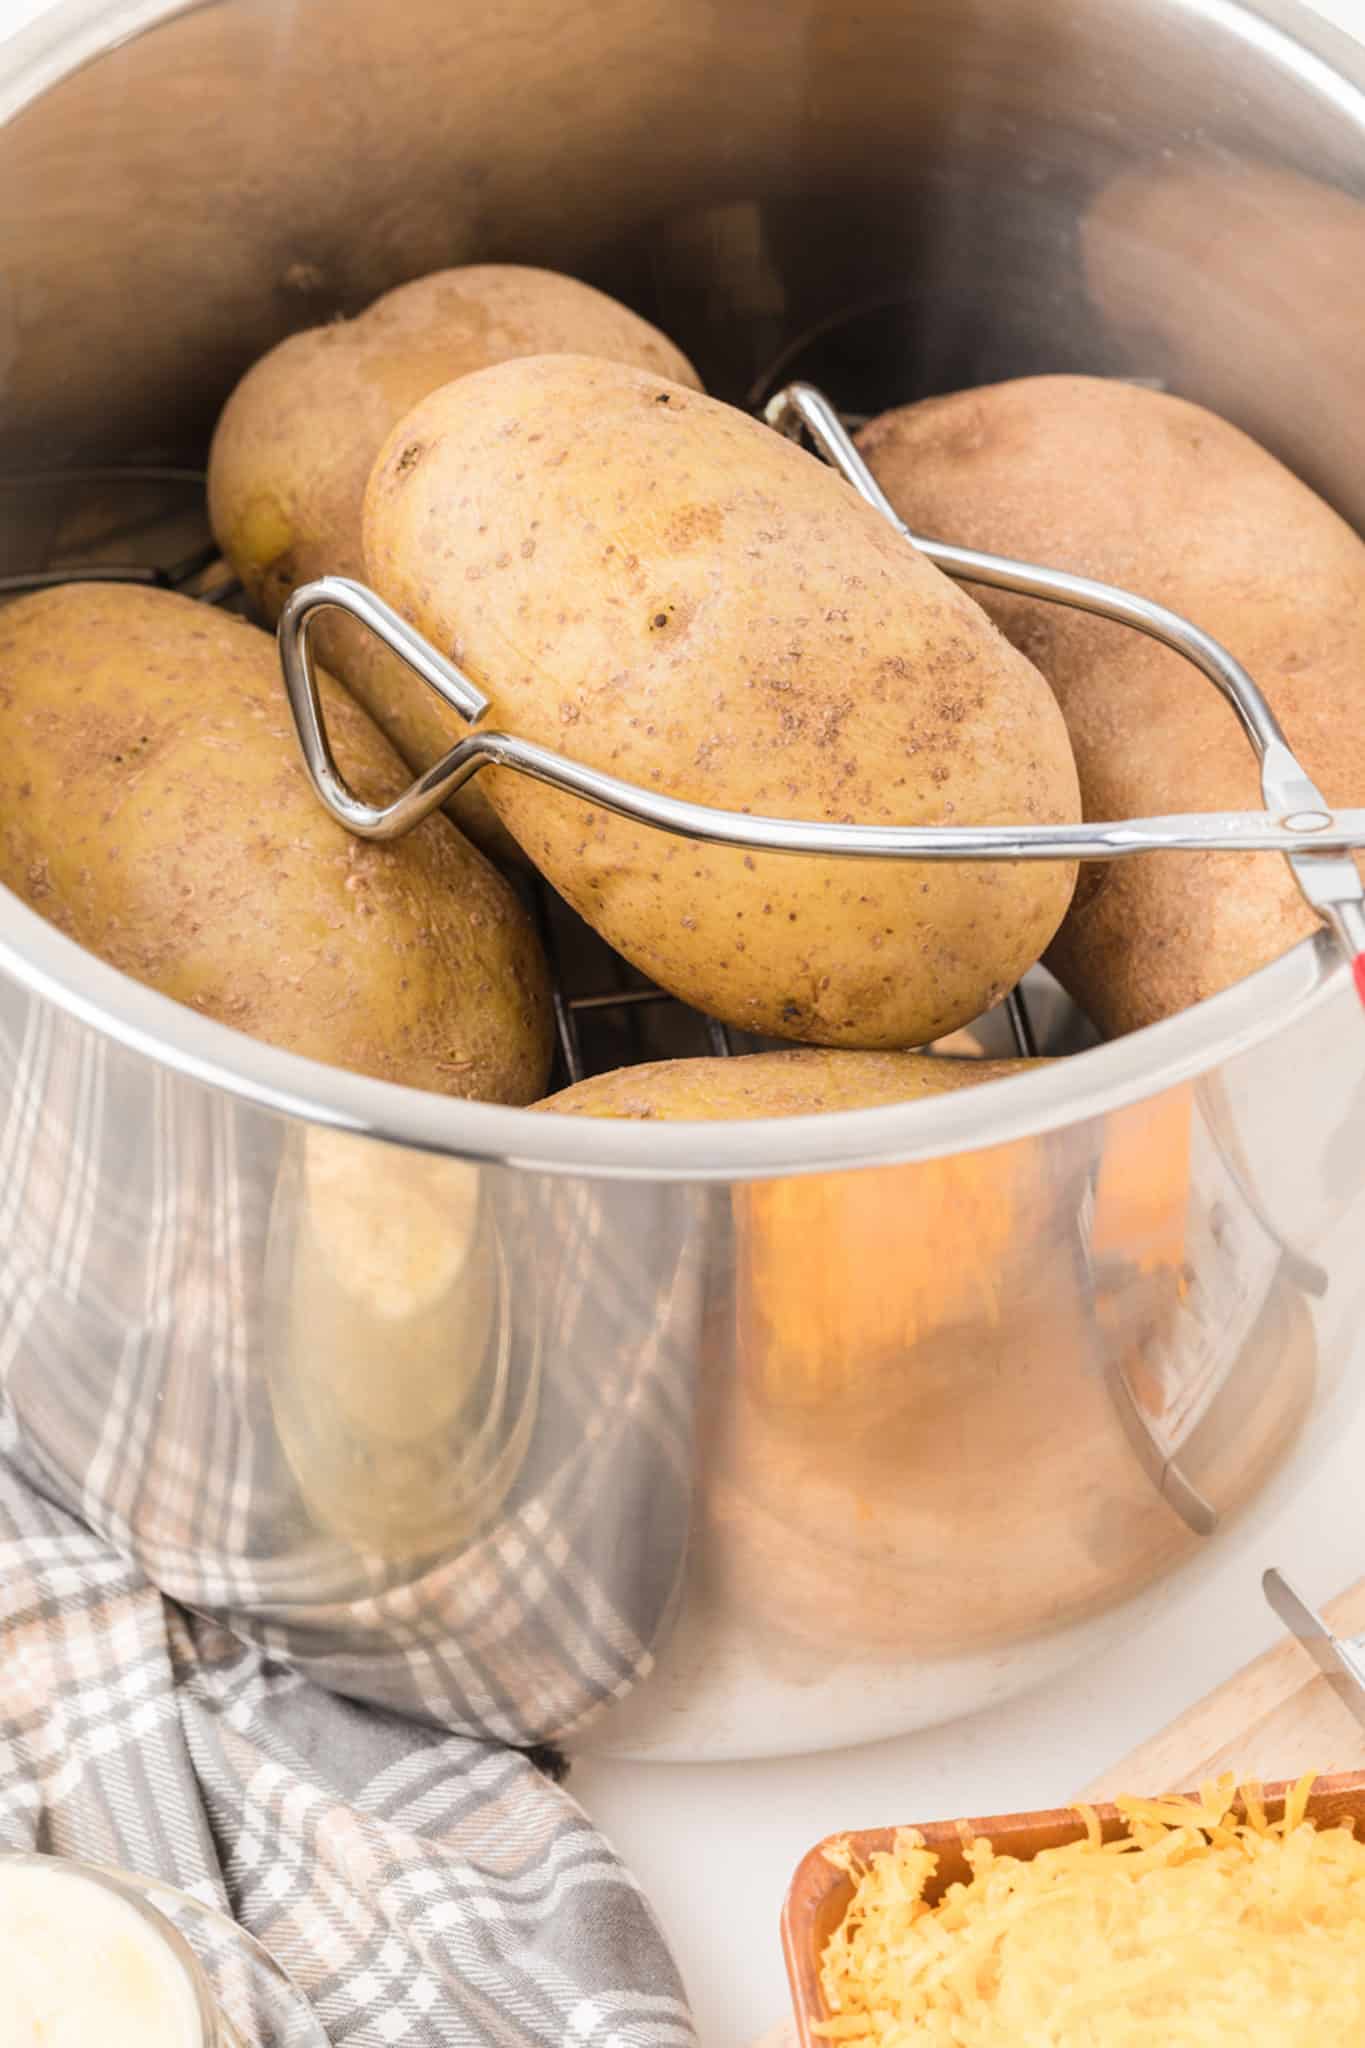 tongs removing a potato from the pot